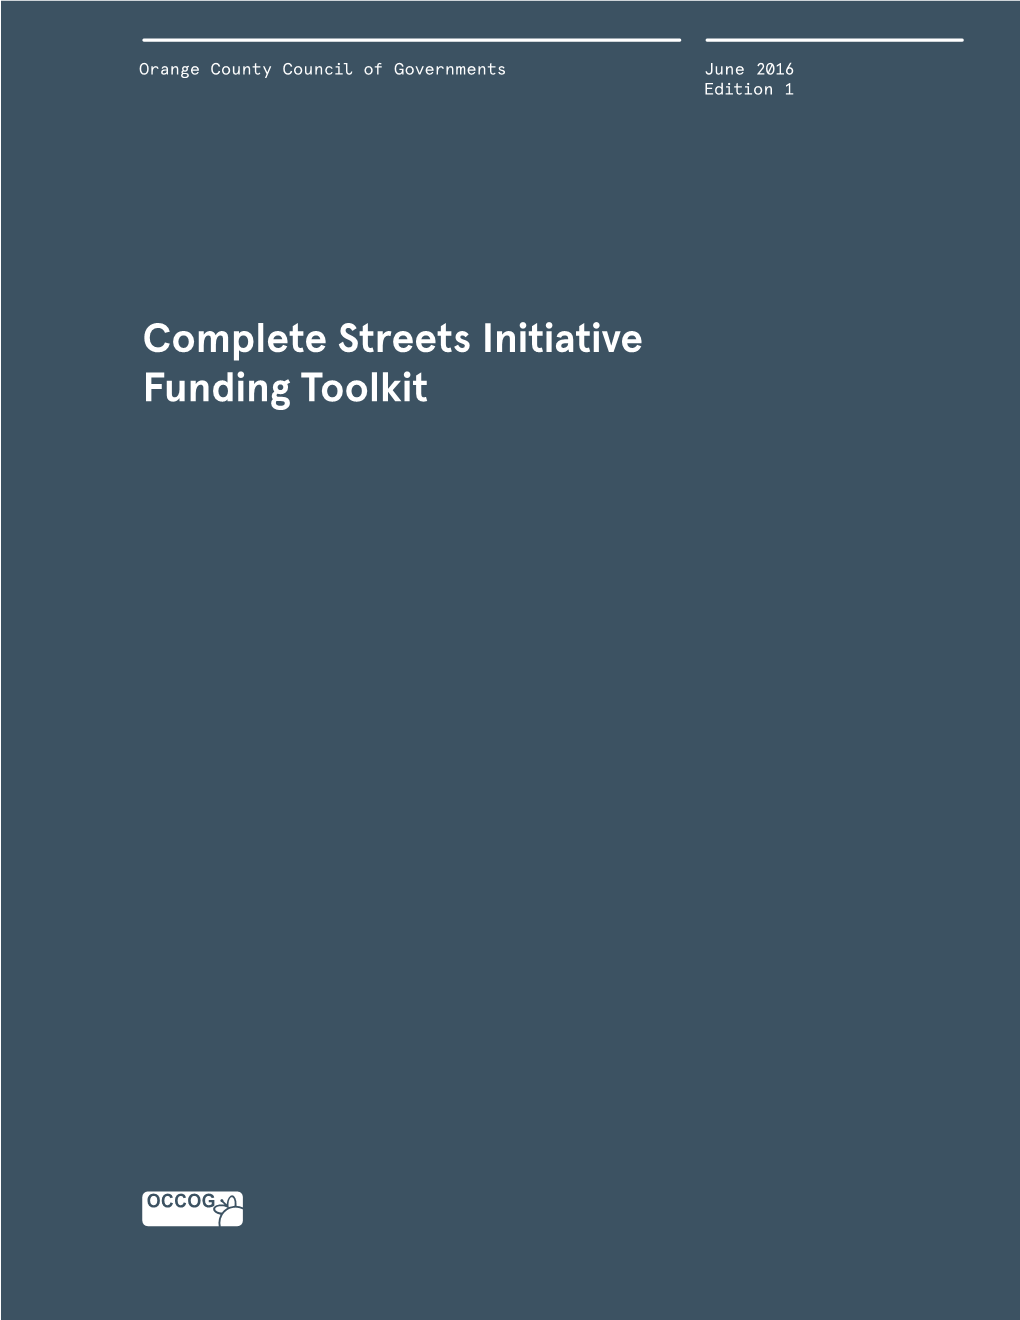 Orange County Complete Streets Funding Toolkit 6